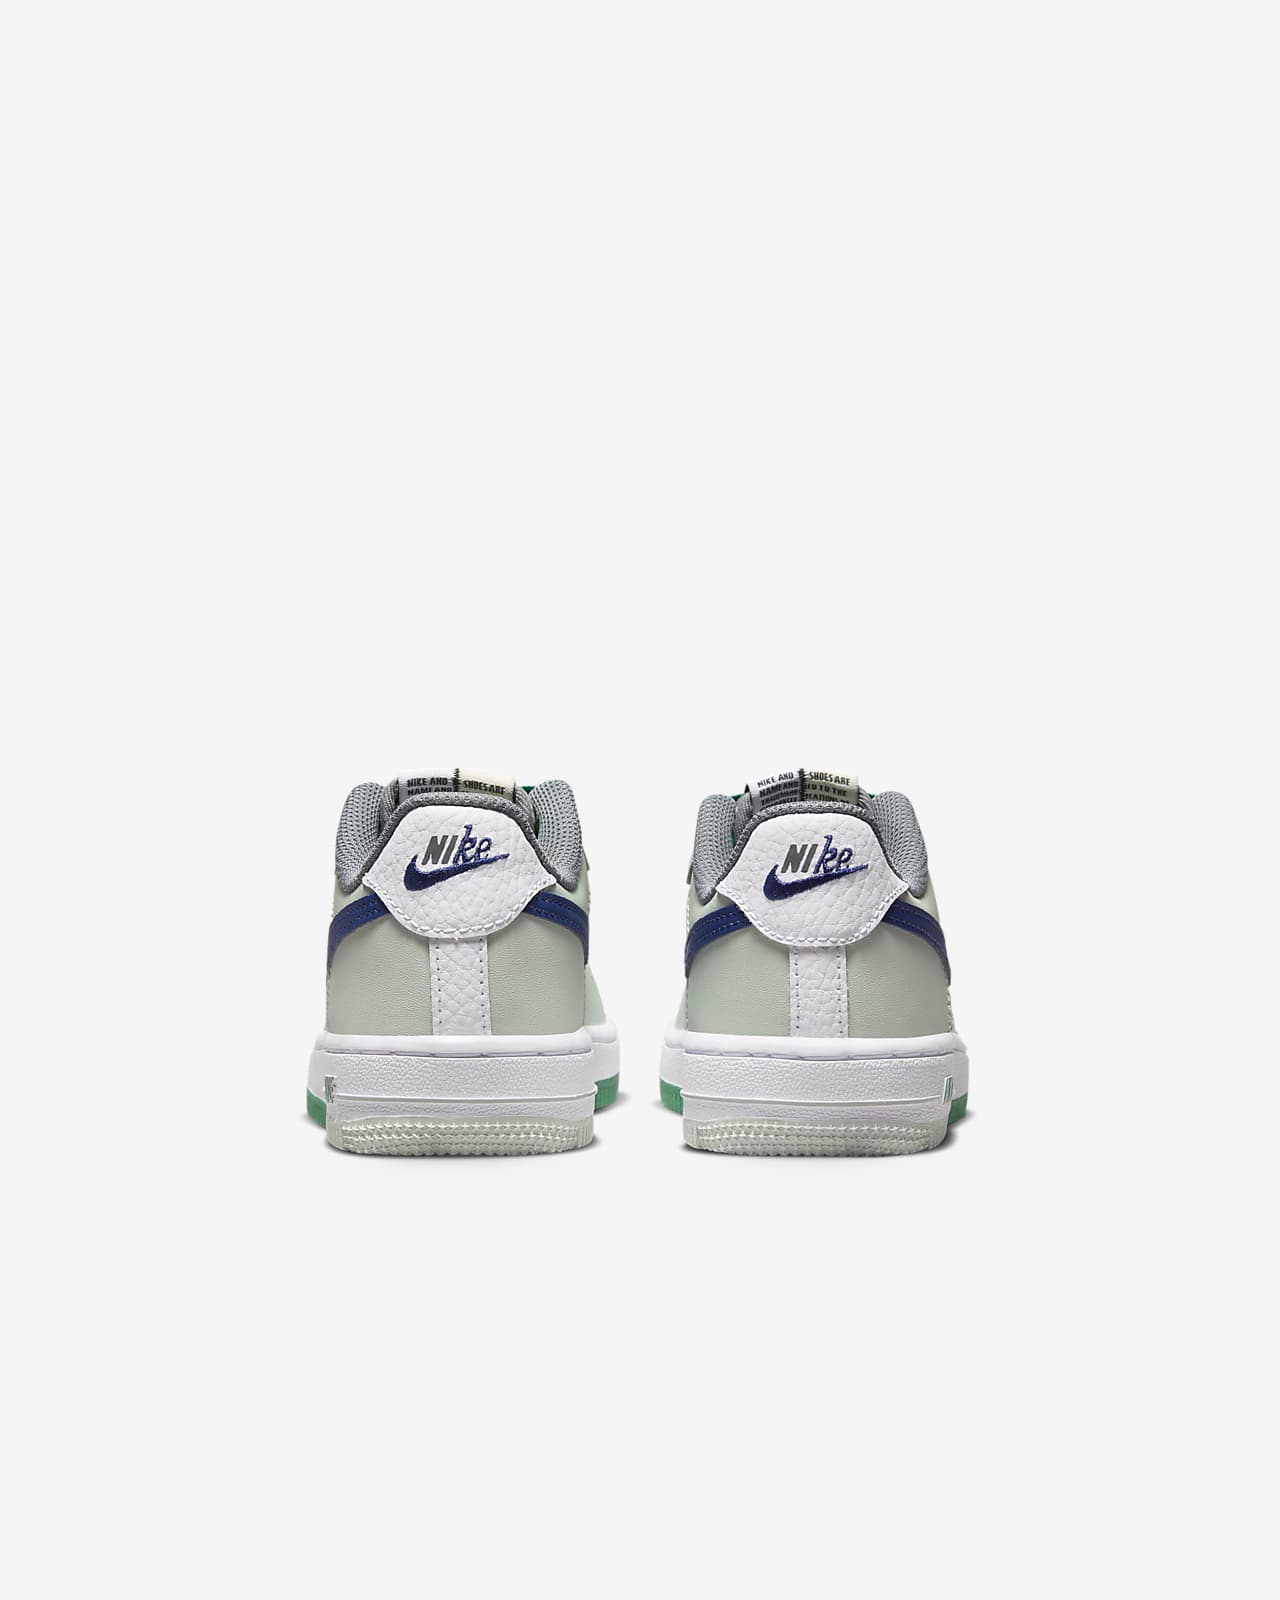 Calzado para niños de preescolar Nike Force 1 LV8.